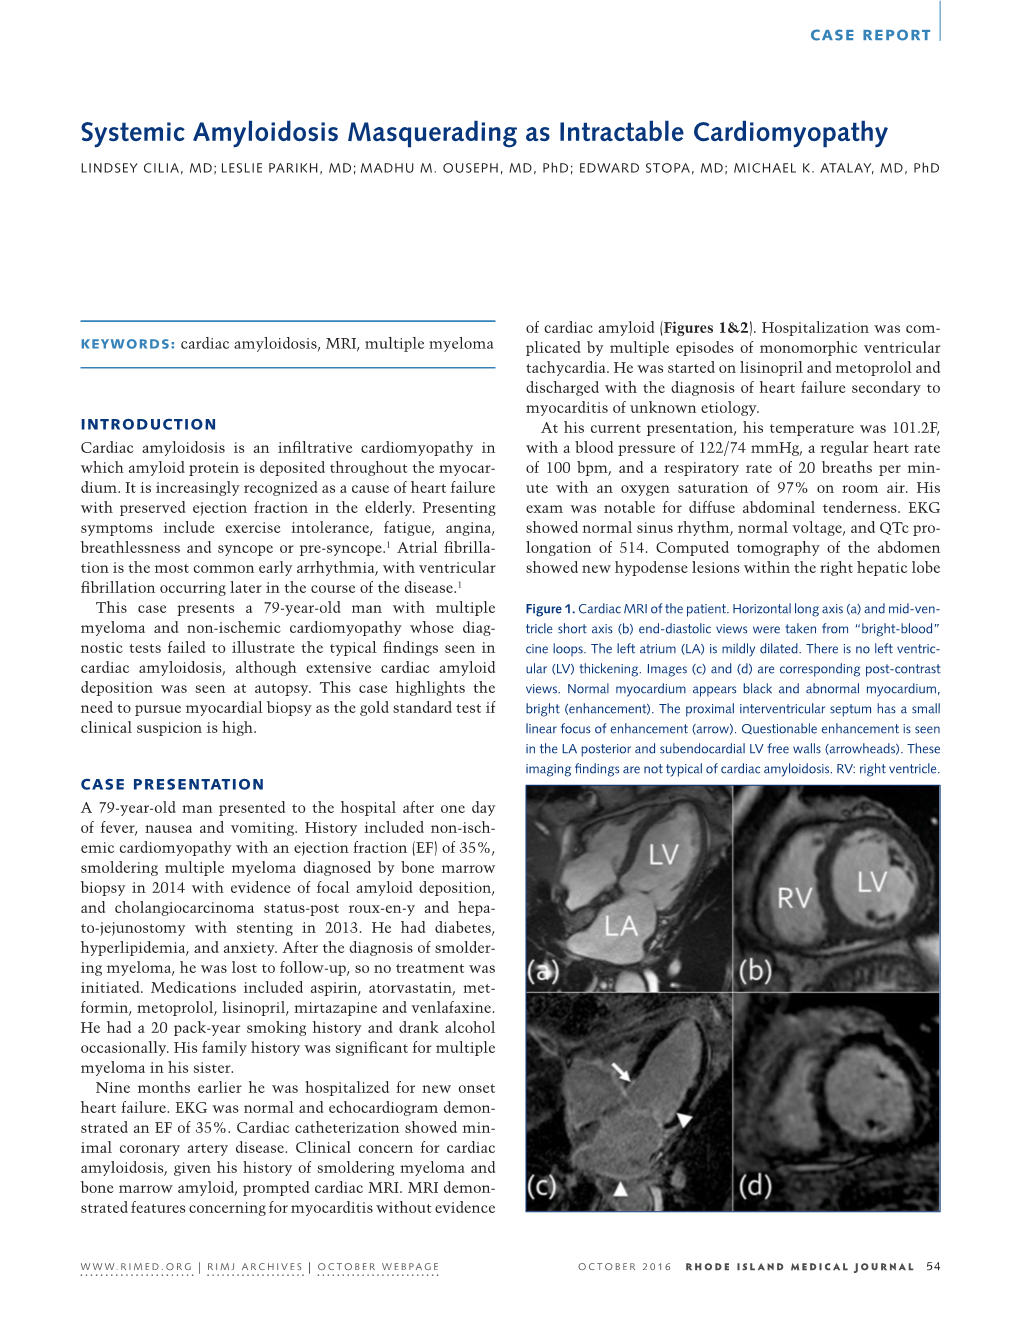 Systemic Amyloidosis Masquerading As Intractable Cardiomyopathy